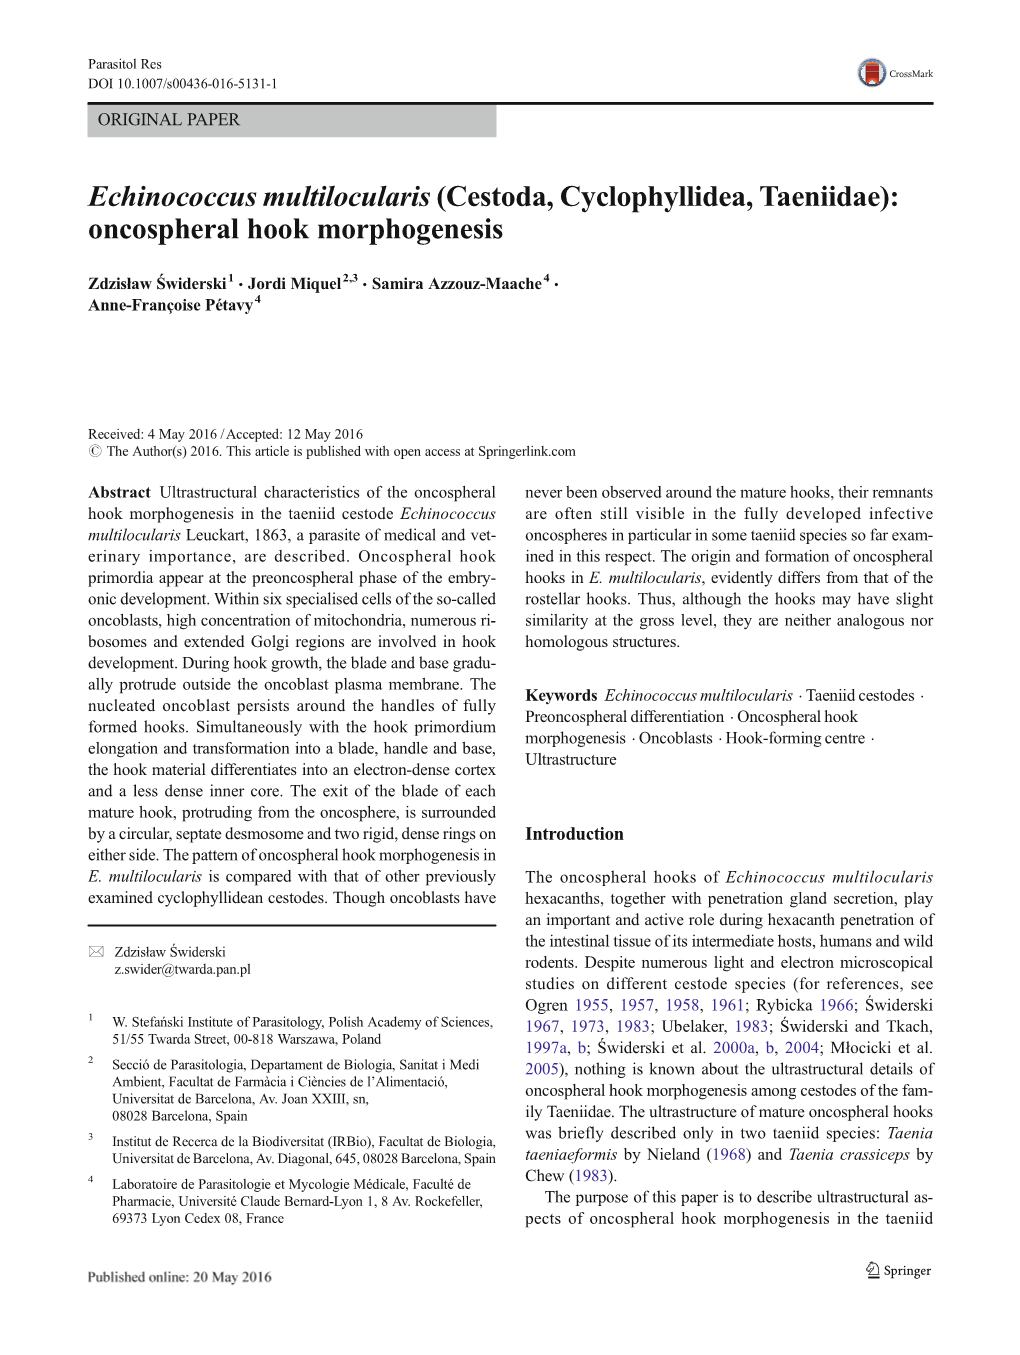 Echinococcus Multilocularis (Cestoda, Cyclophyllidea, Taeniidae): Oncospheral Hook Morphogenesis